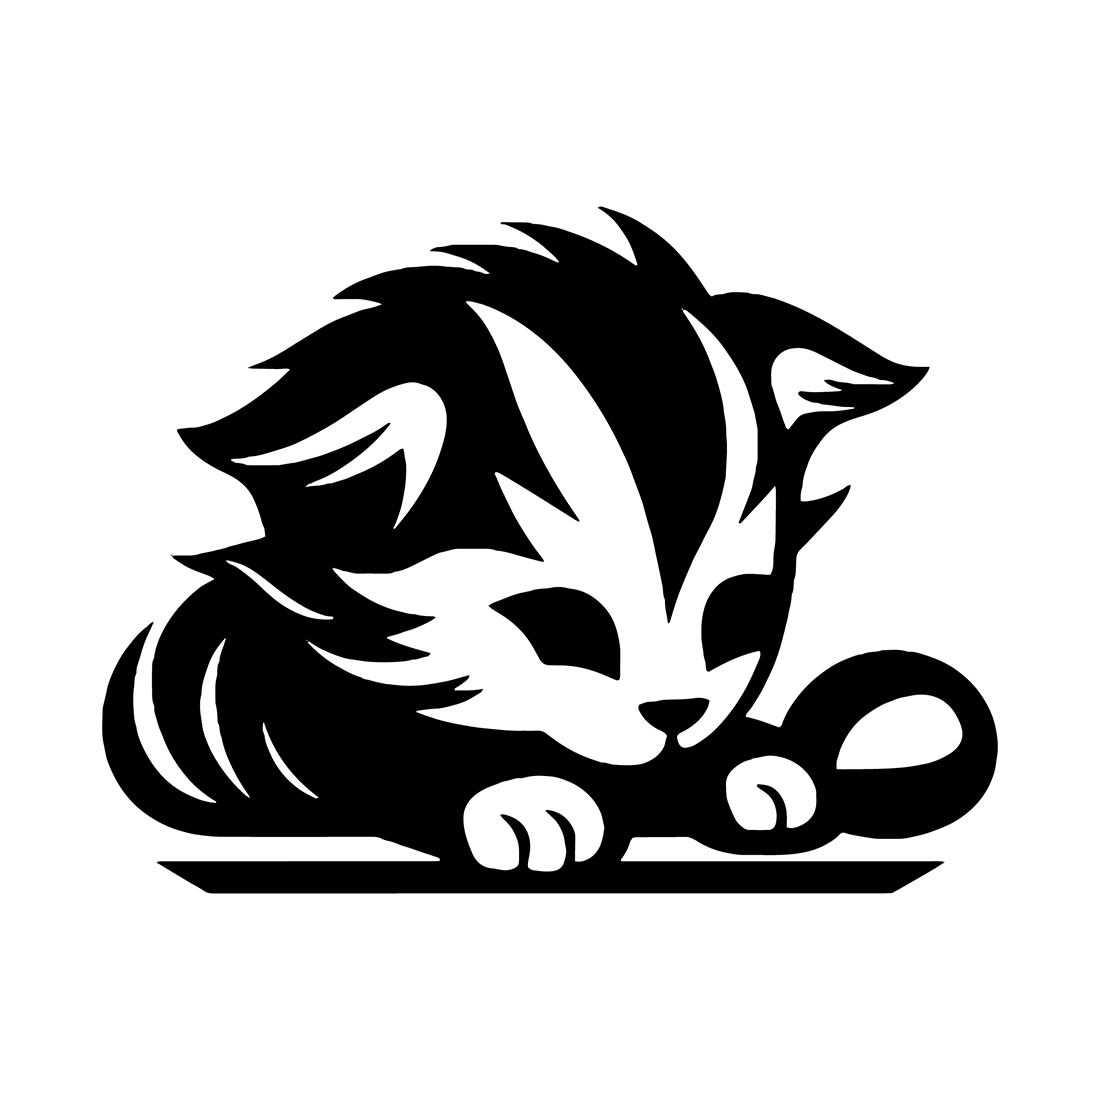 Simple Flat Cat Logo Illustration cover image.